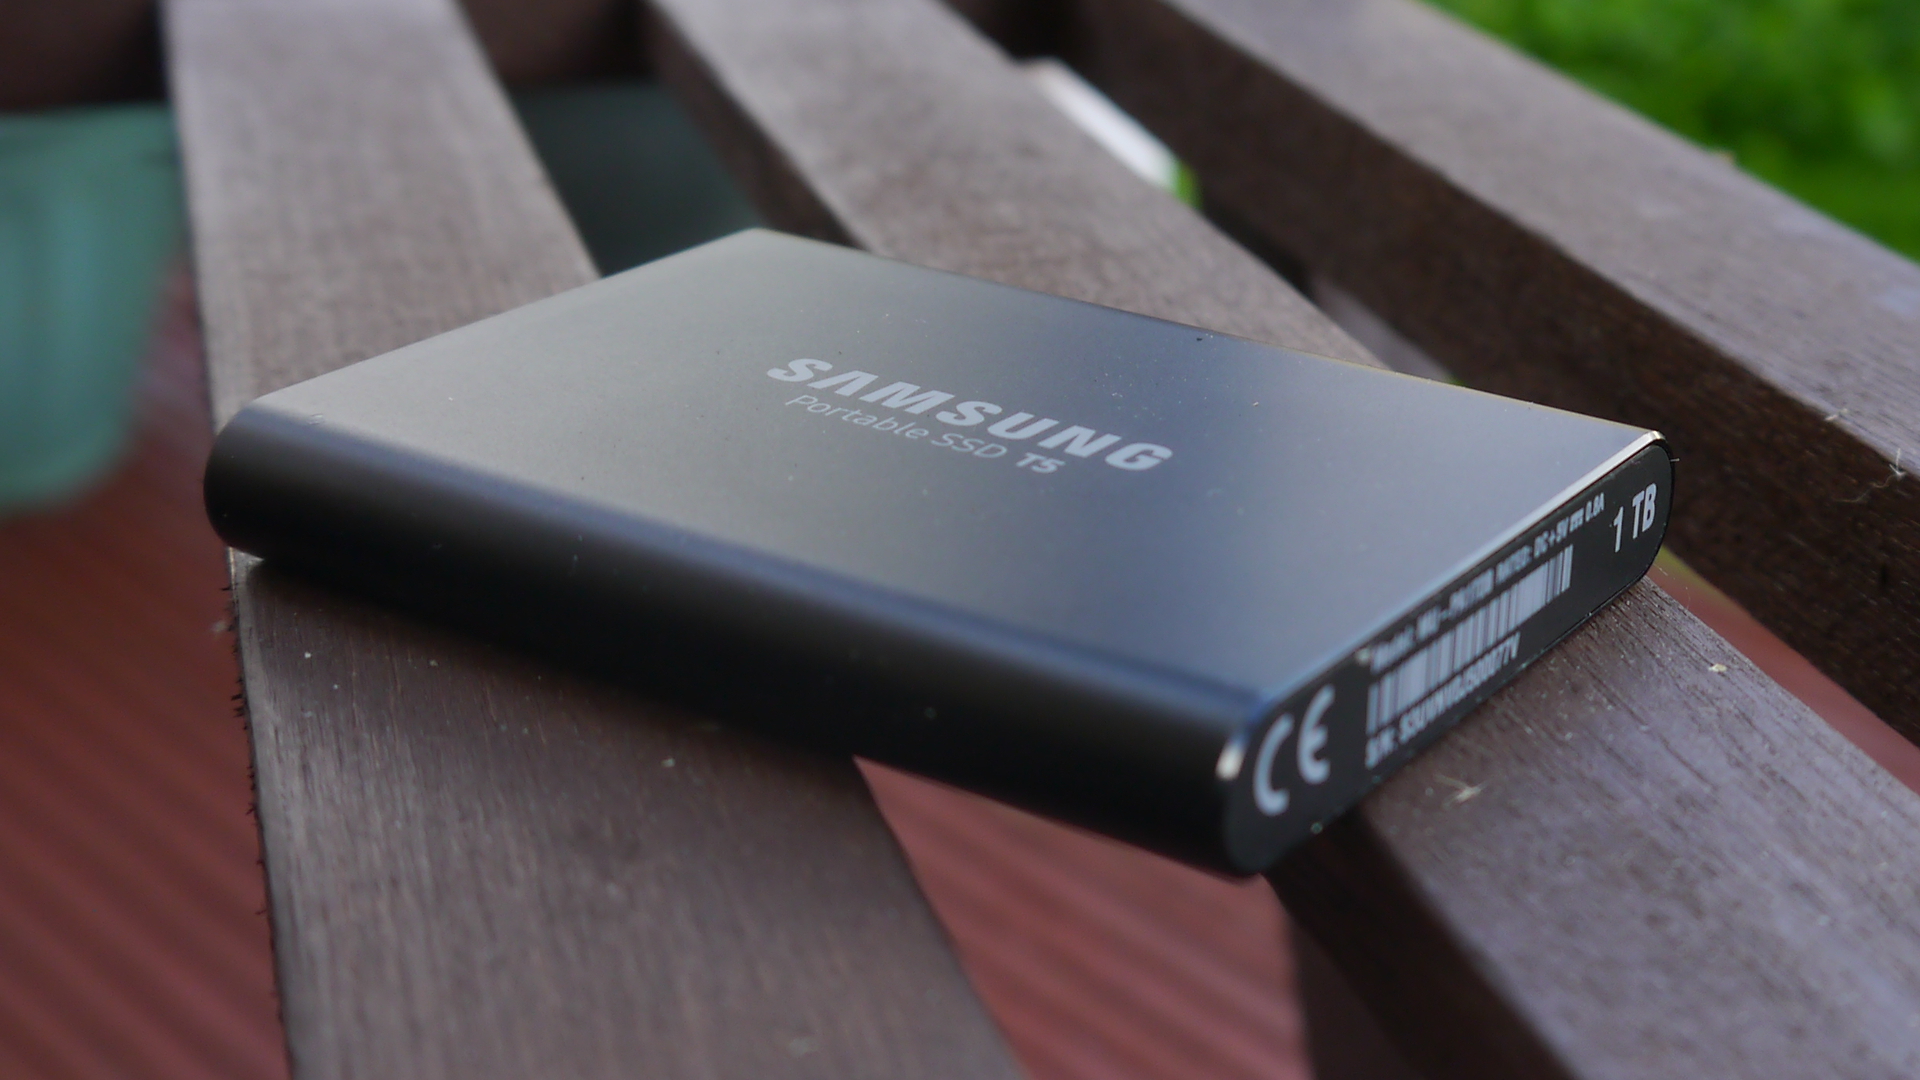 SSD Portabel Samsung T5